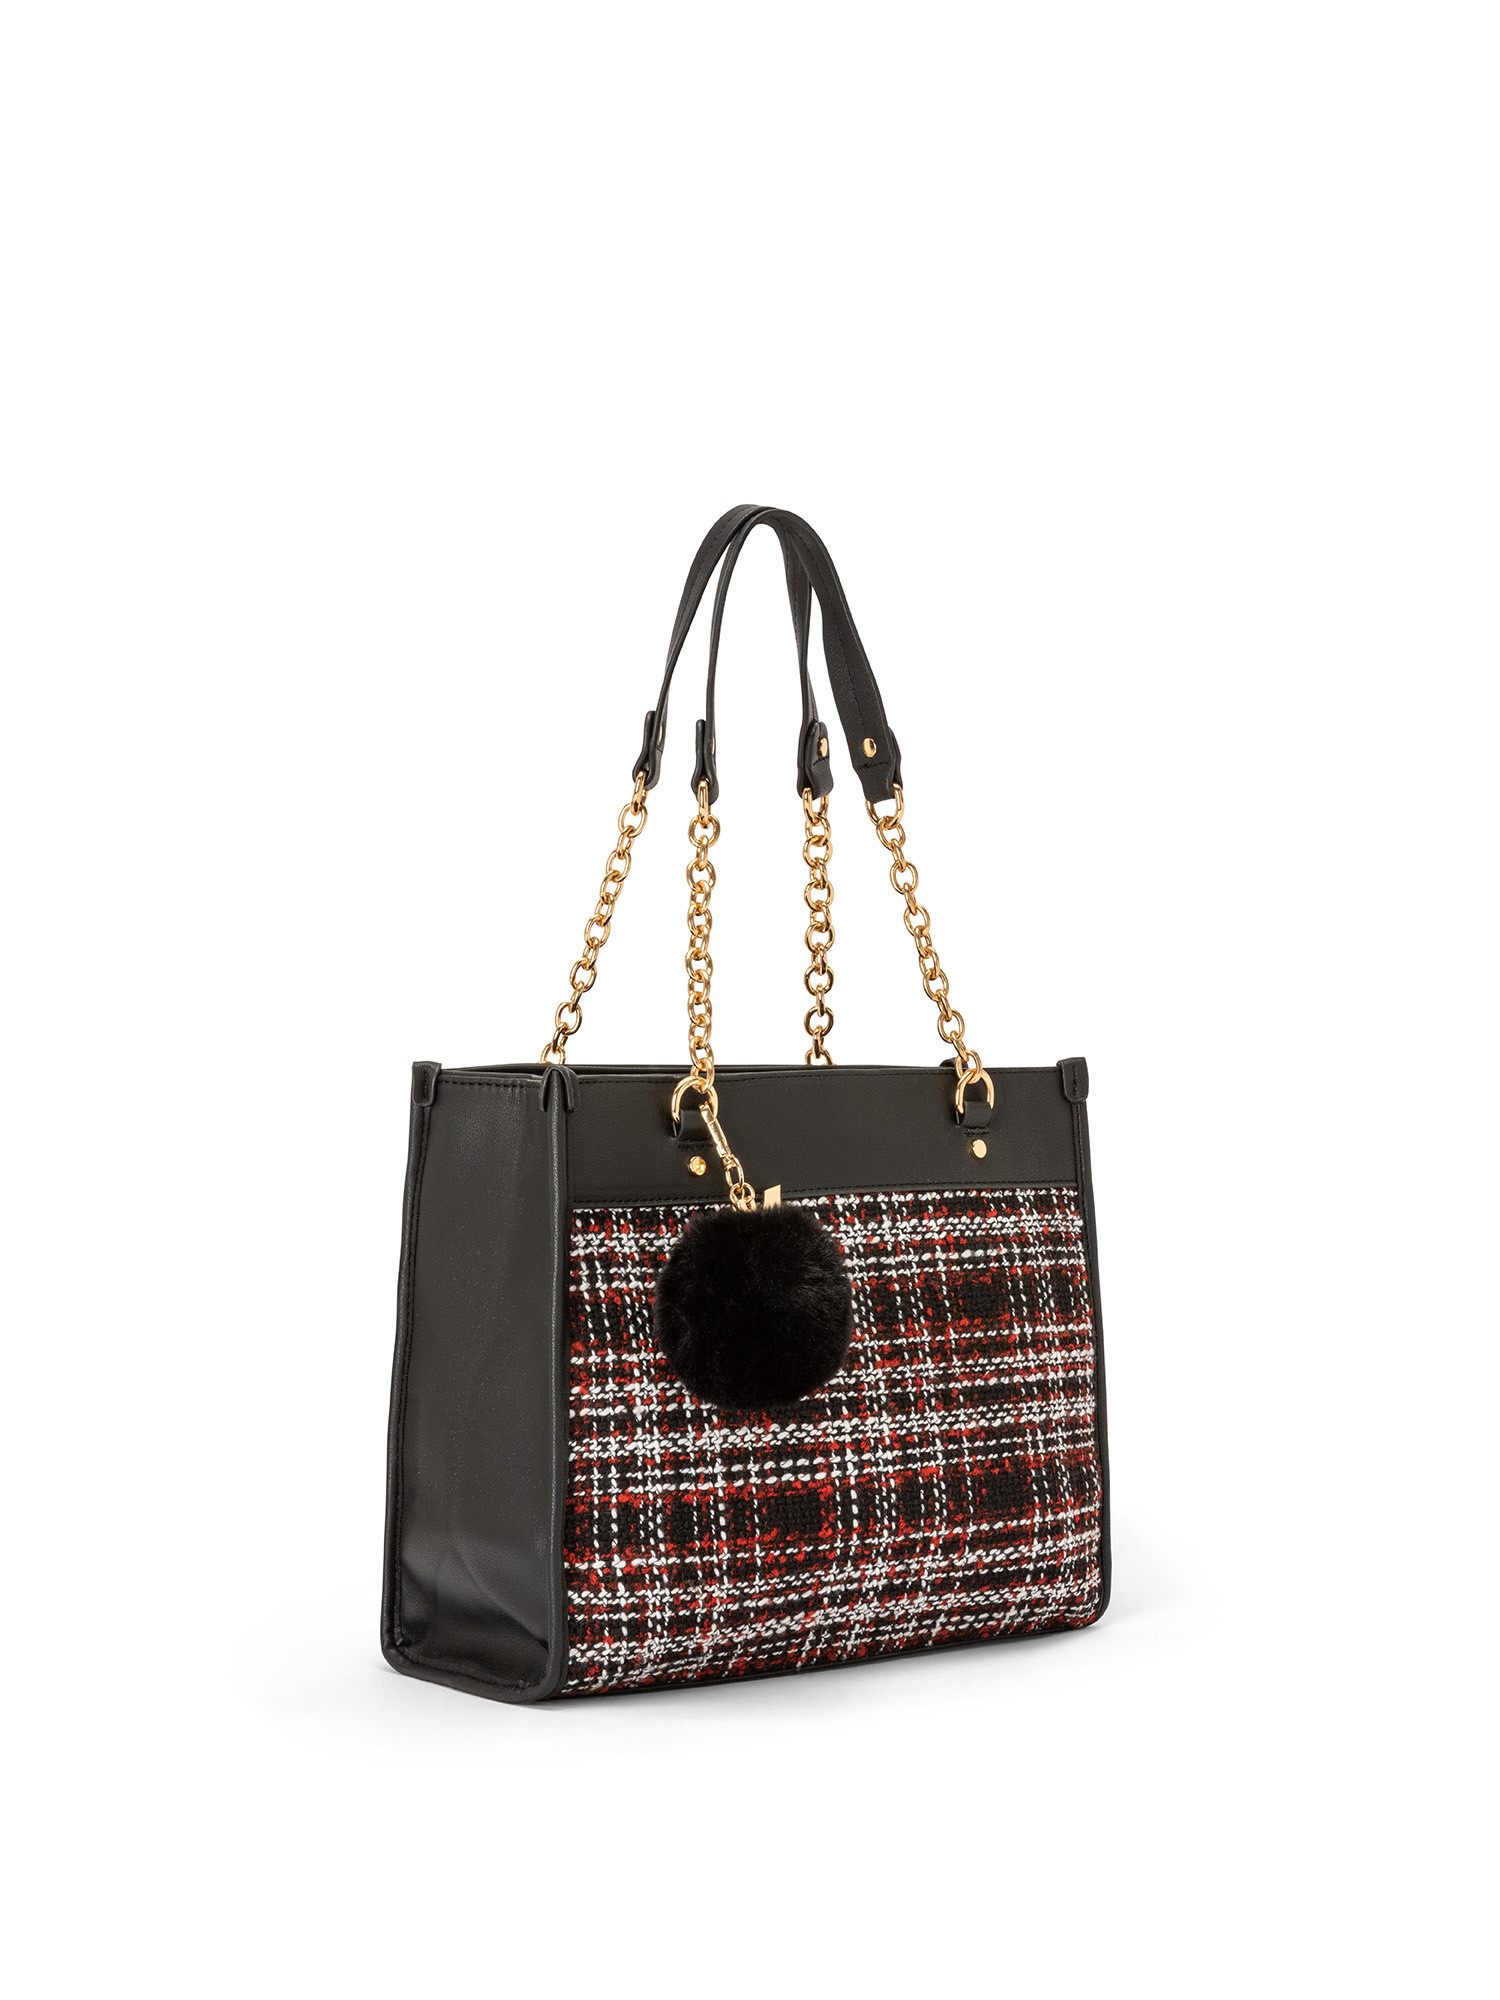 Koan - Small shopping bag with Scottish insert, Black, large image number 1